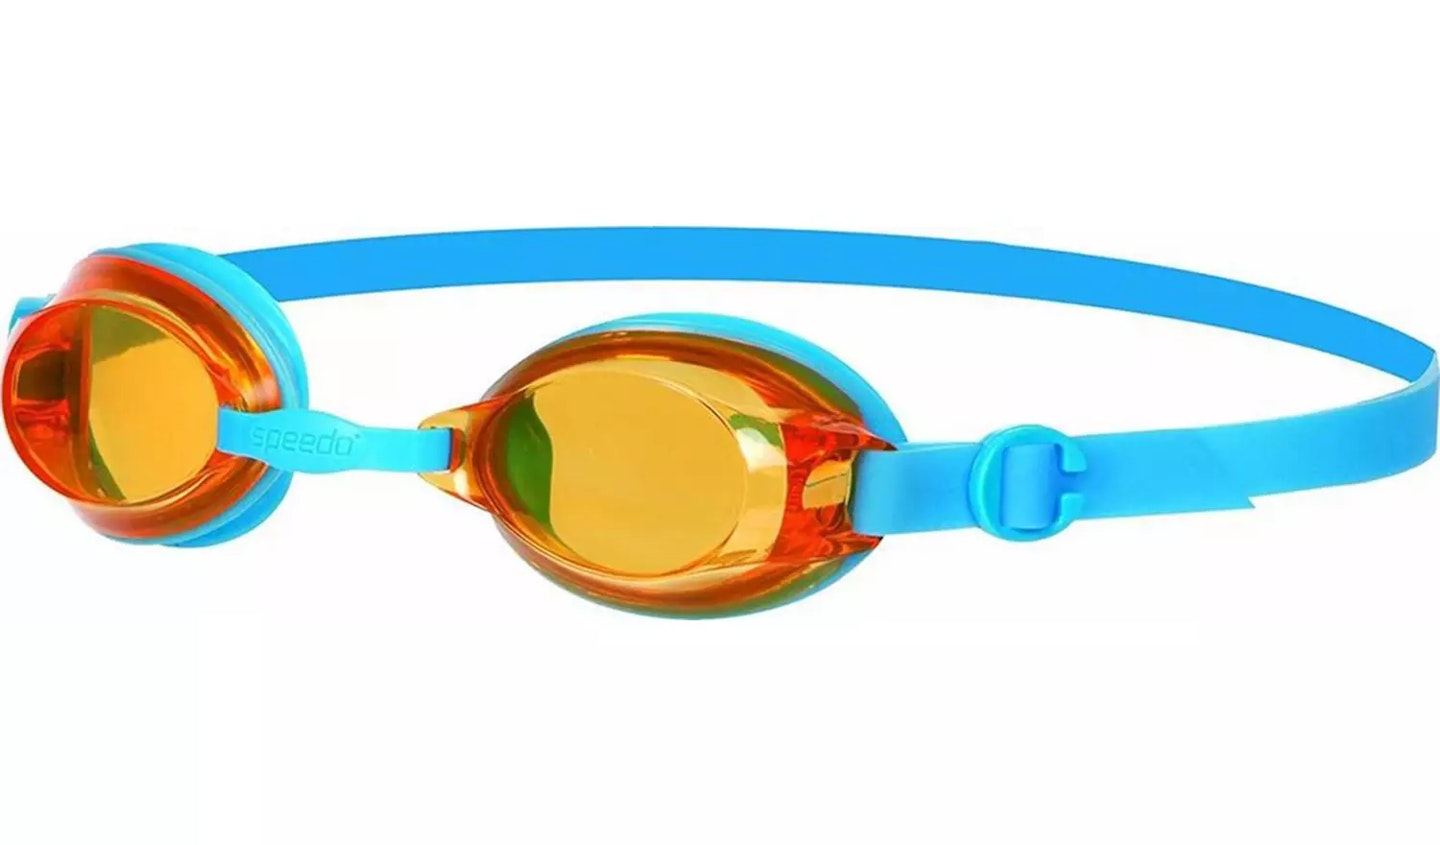 Kids' swimming goggles